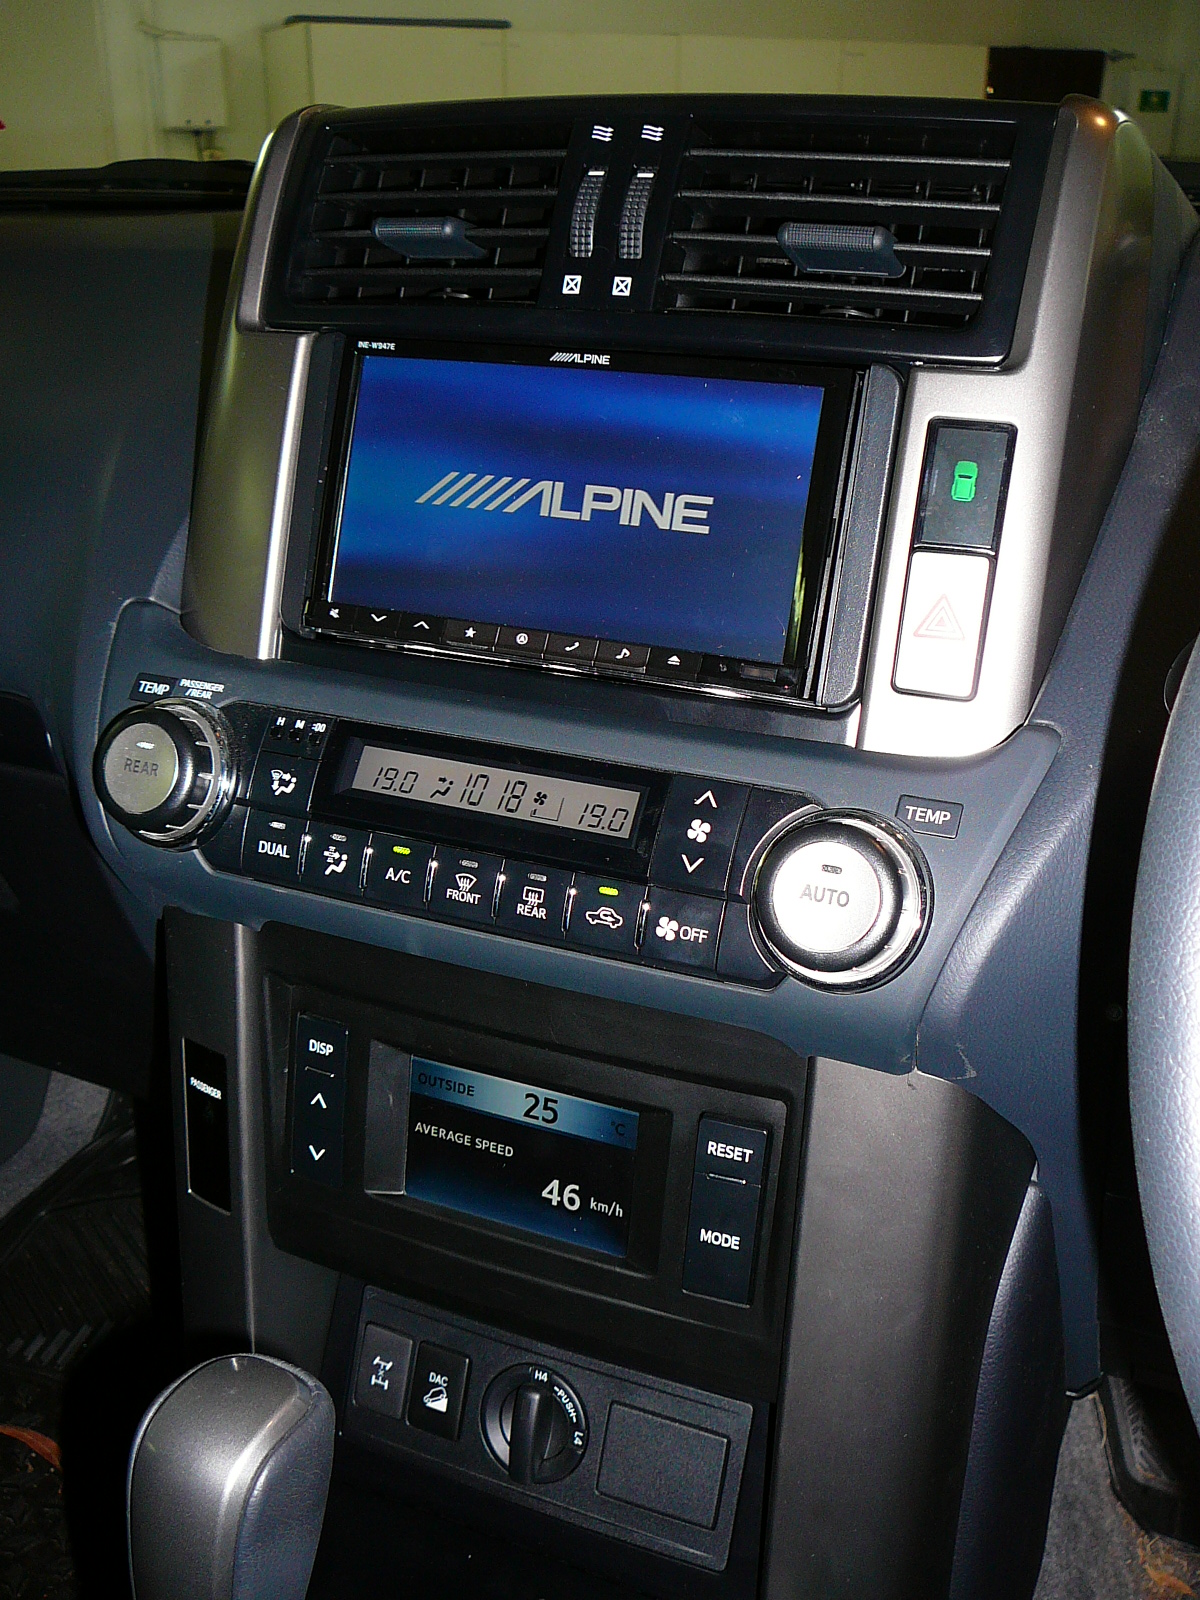 Toyota Prado 150 series, Alpine Navigation and relocation of diagnostic display